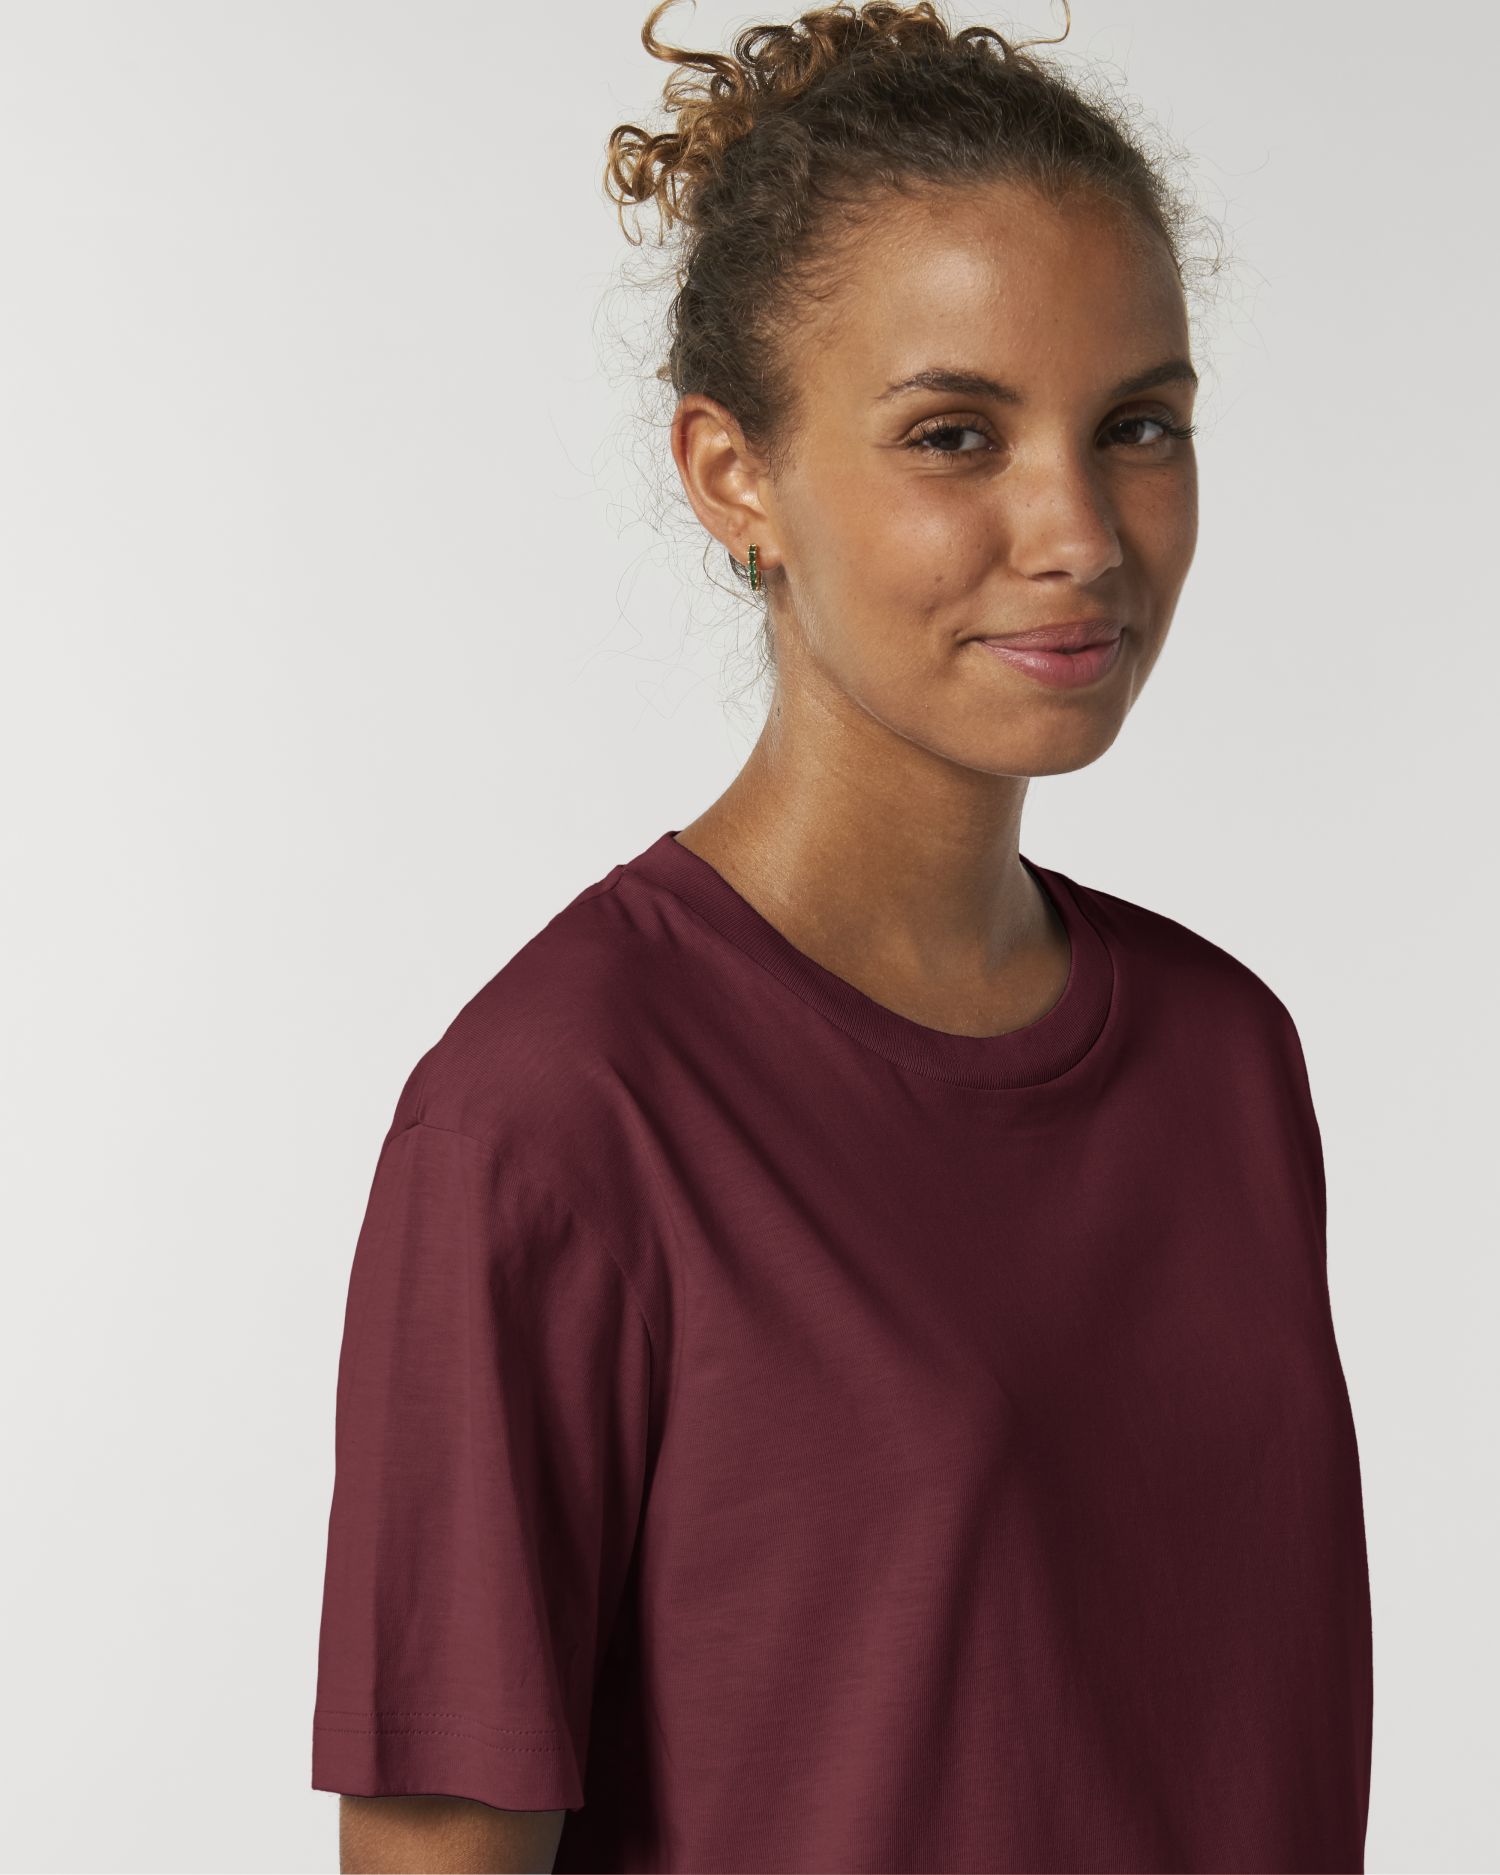 T-Shirt Fuser in Farbe Burgundy